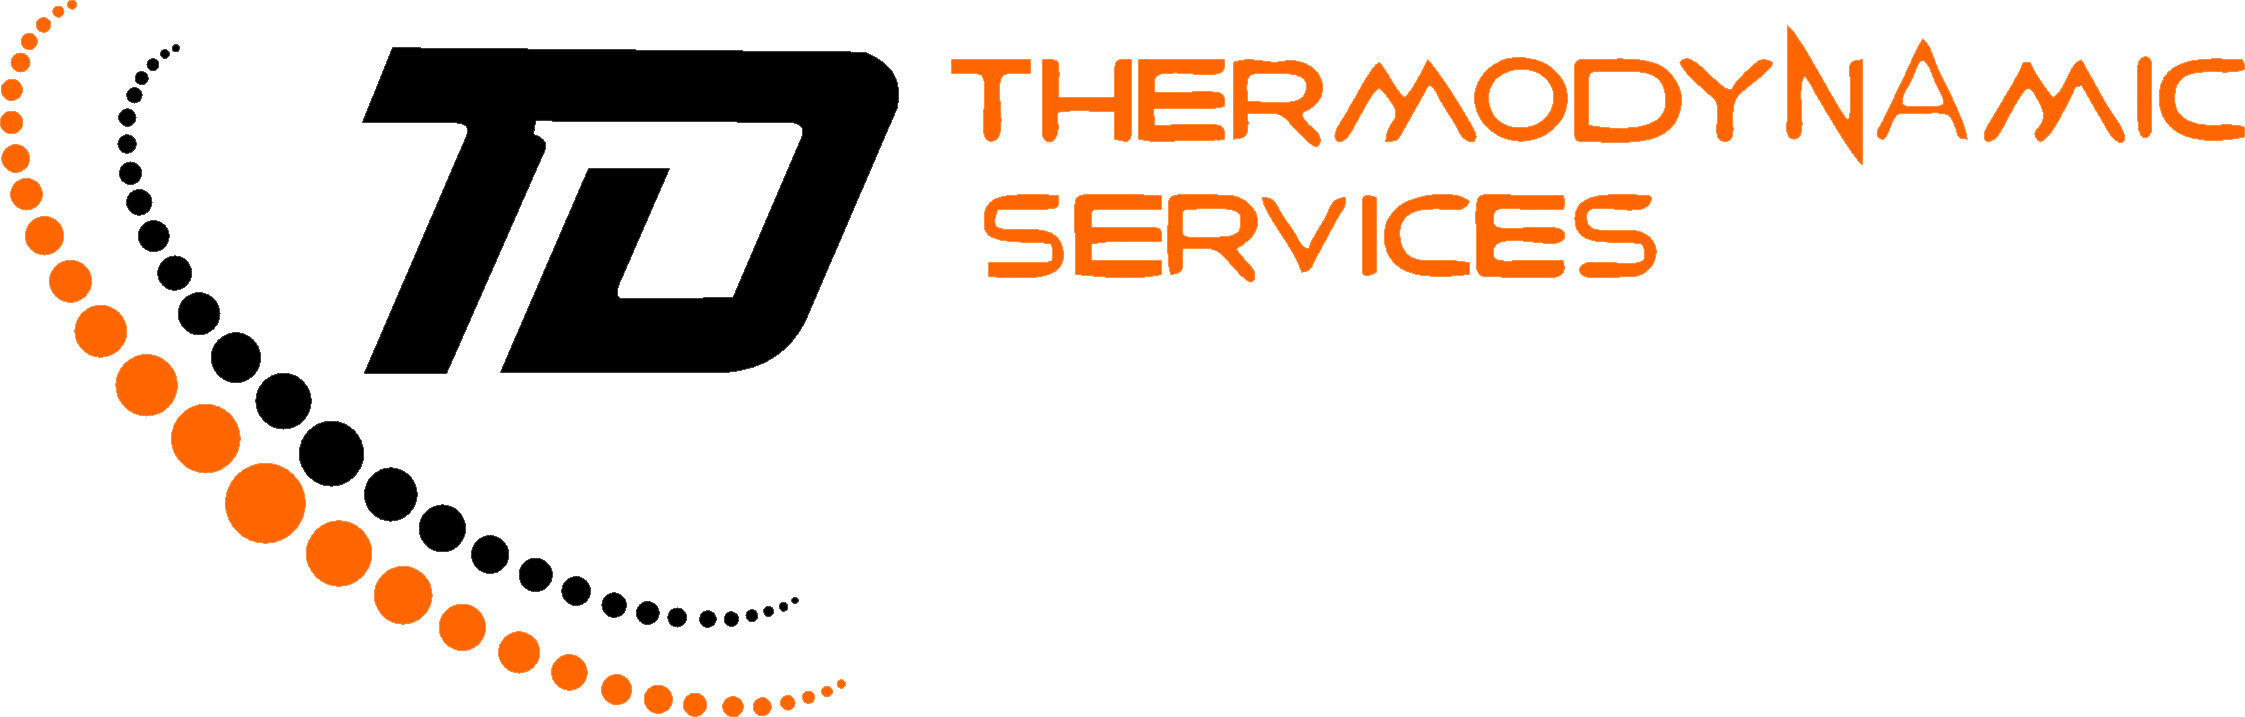 Thermodynamic-logo